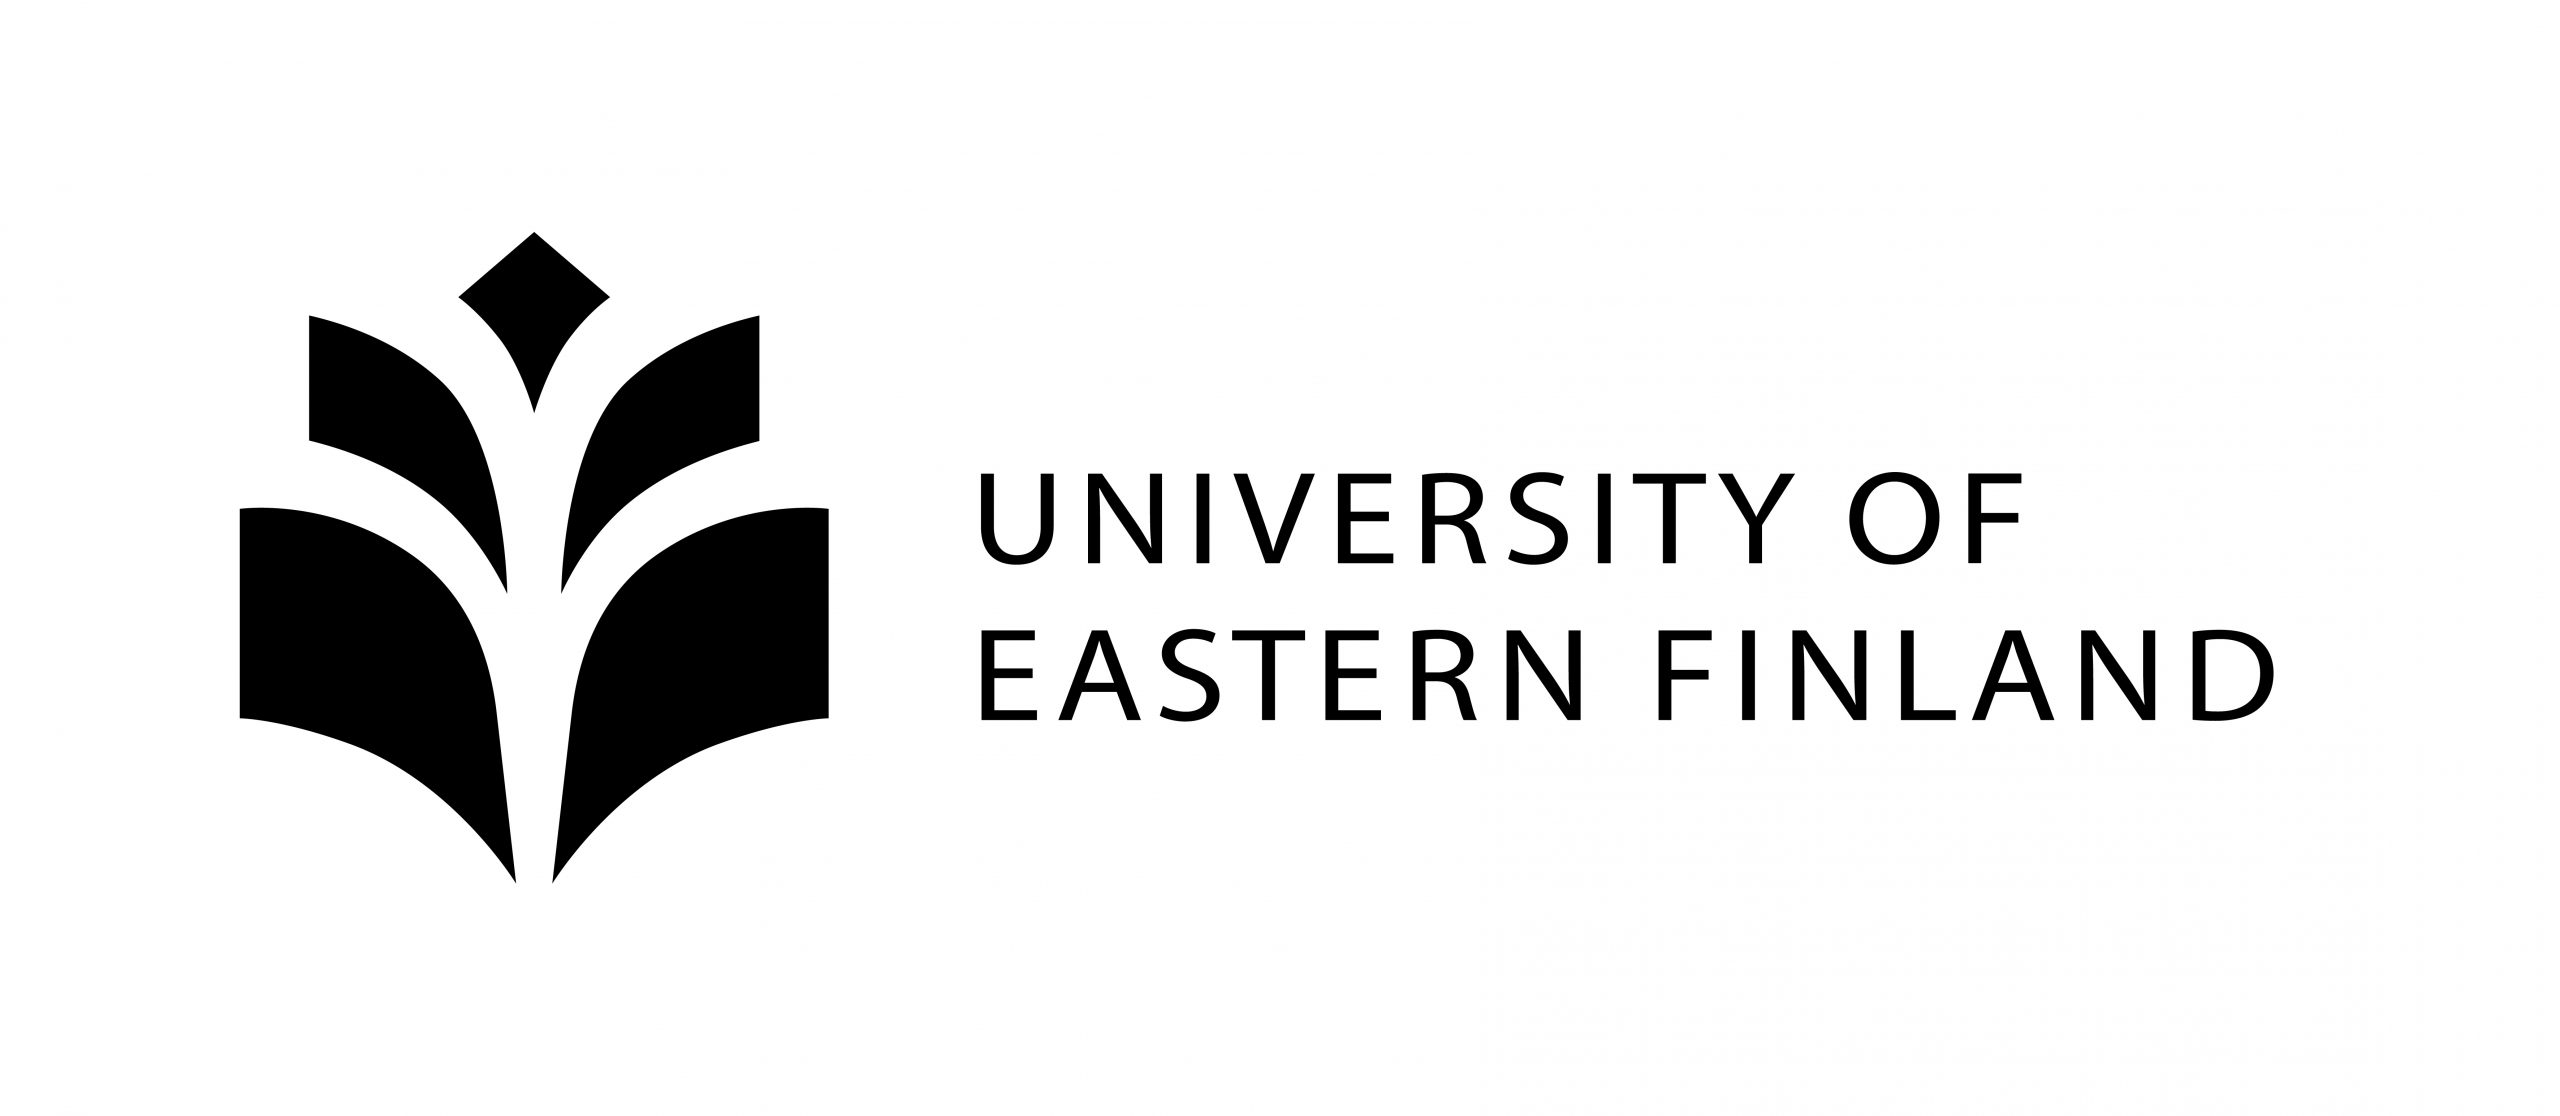 University of Eastern Finland's logo